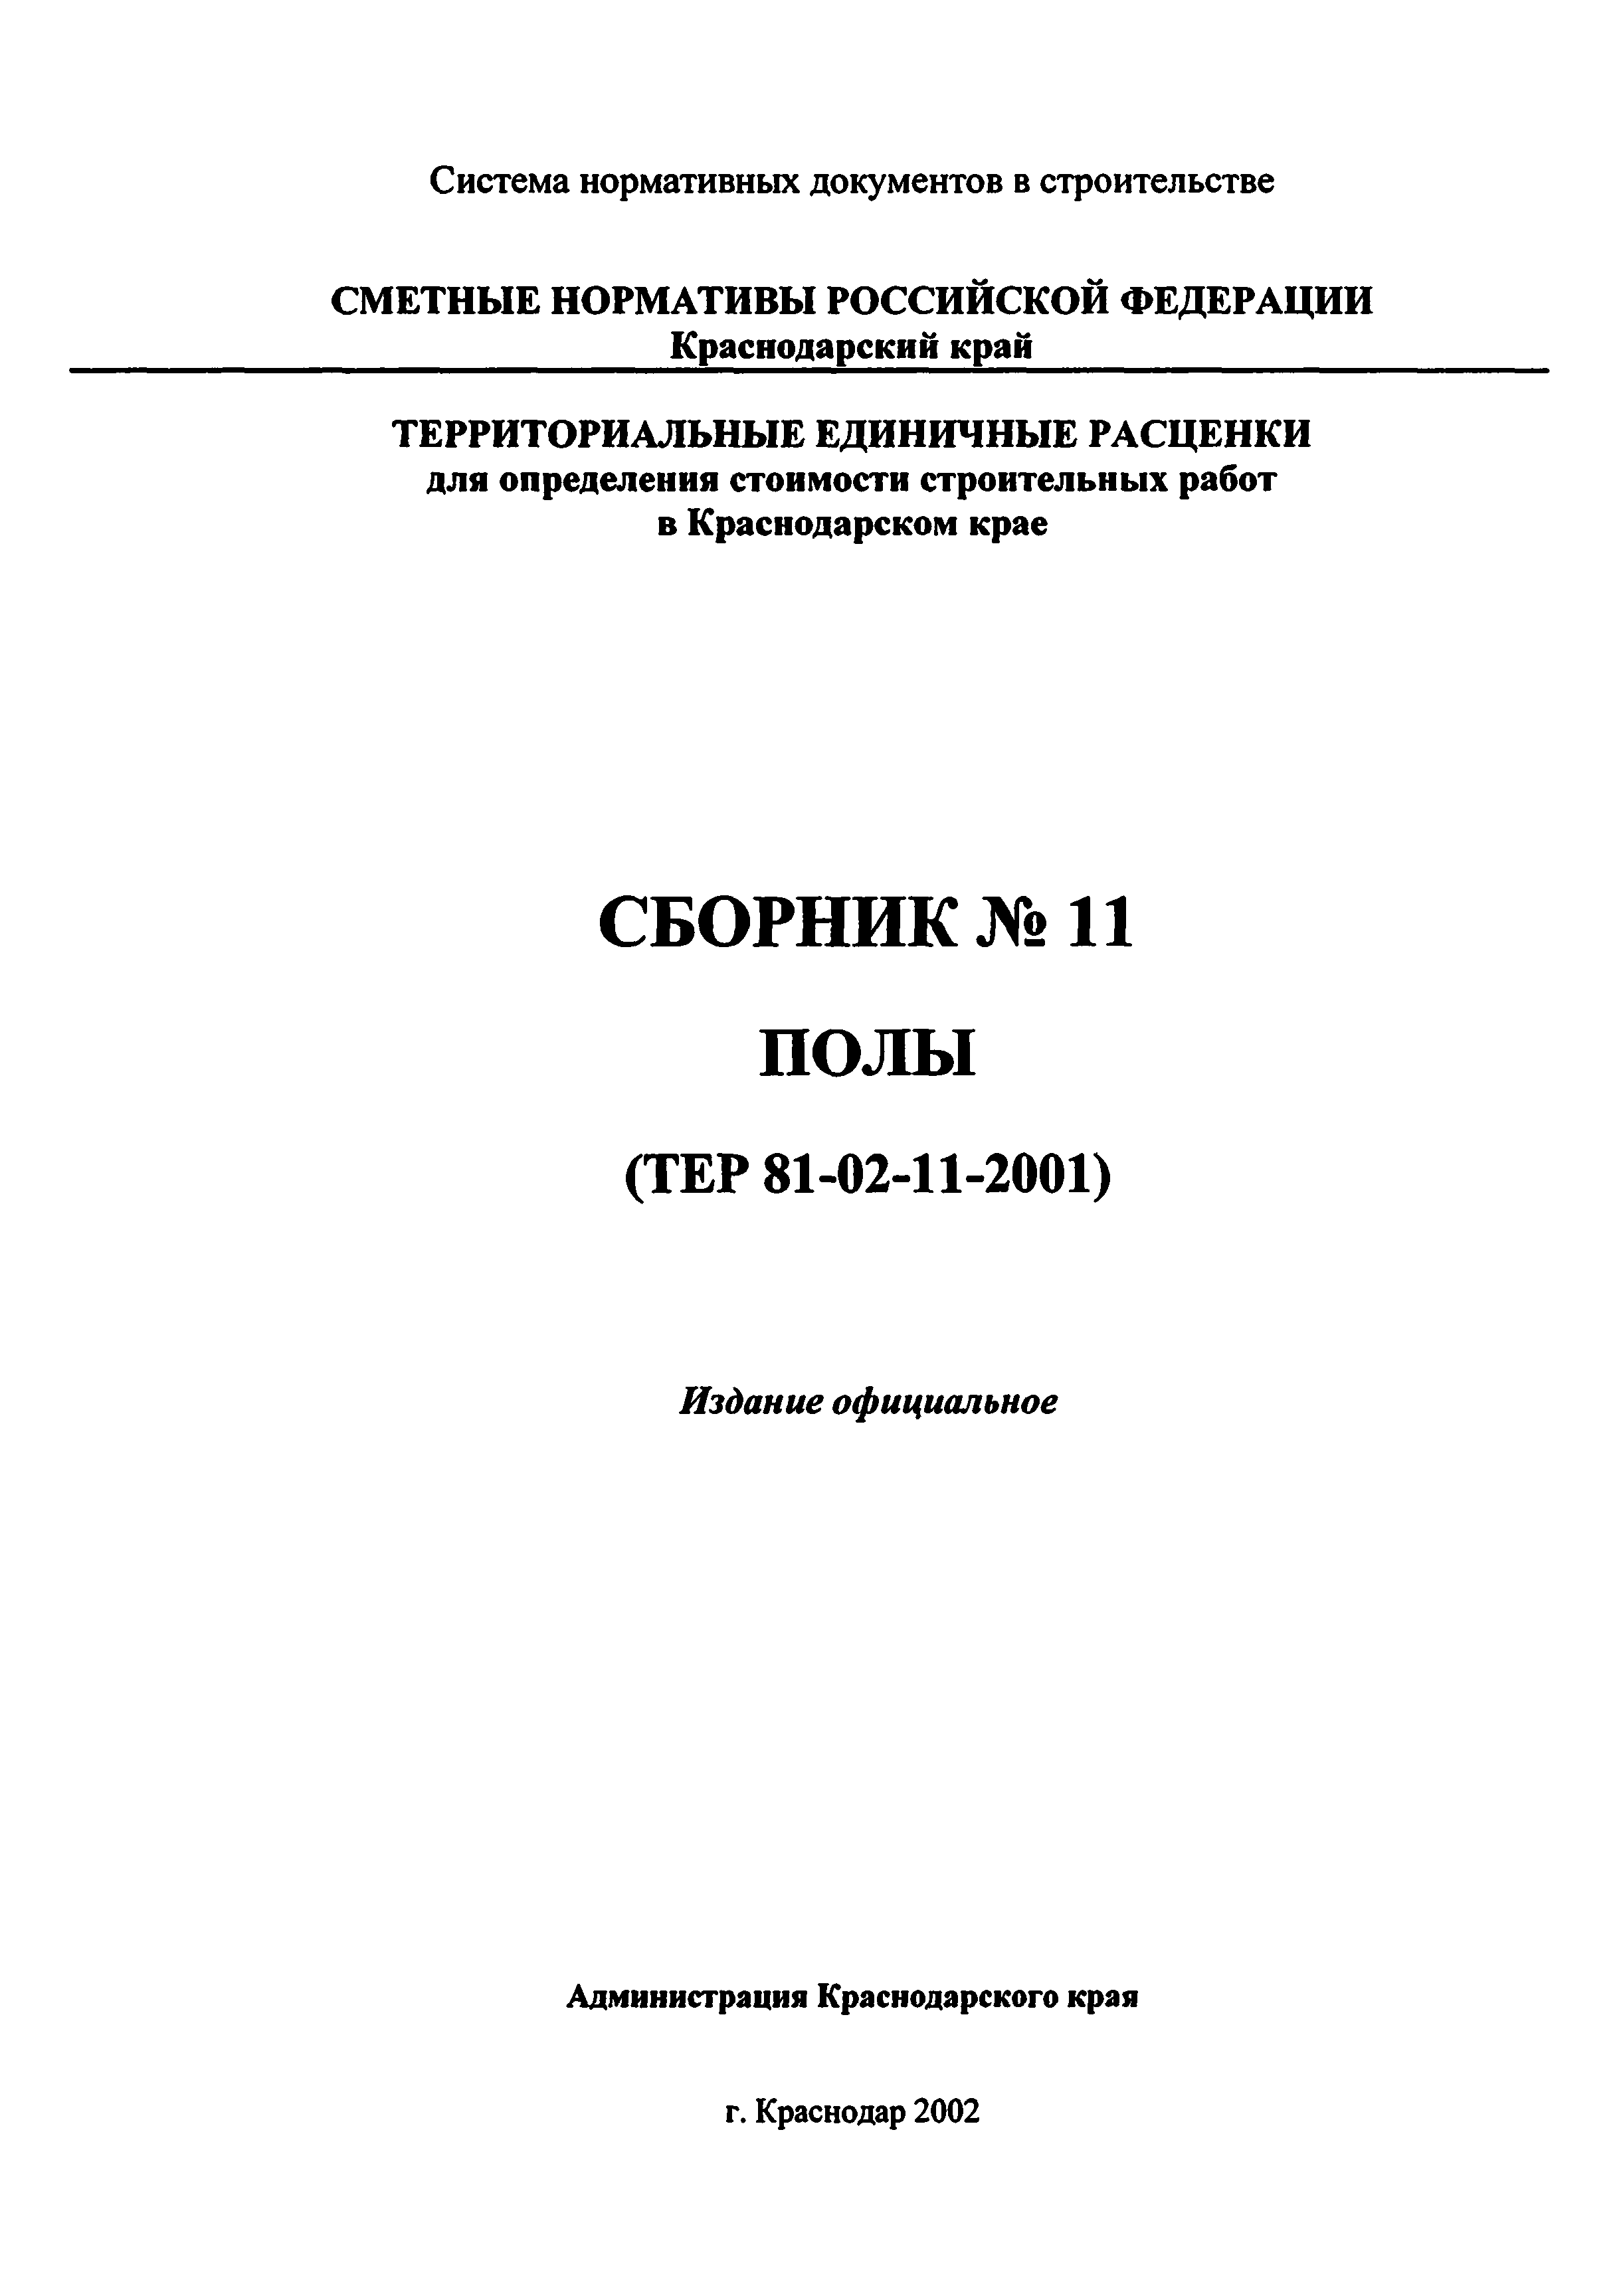 ТЕР Краснодарского края 2001-11